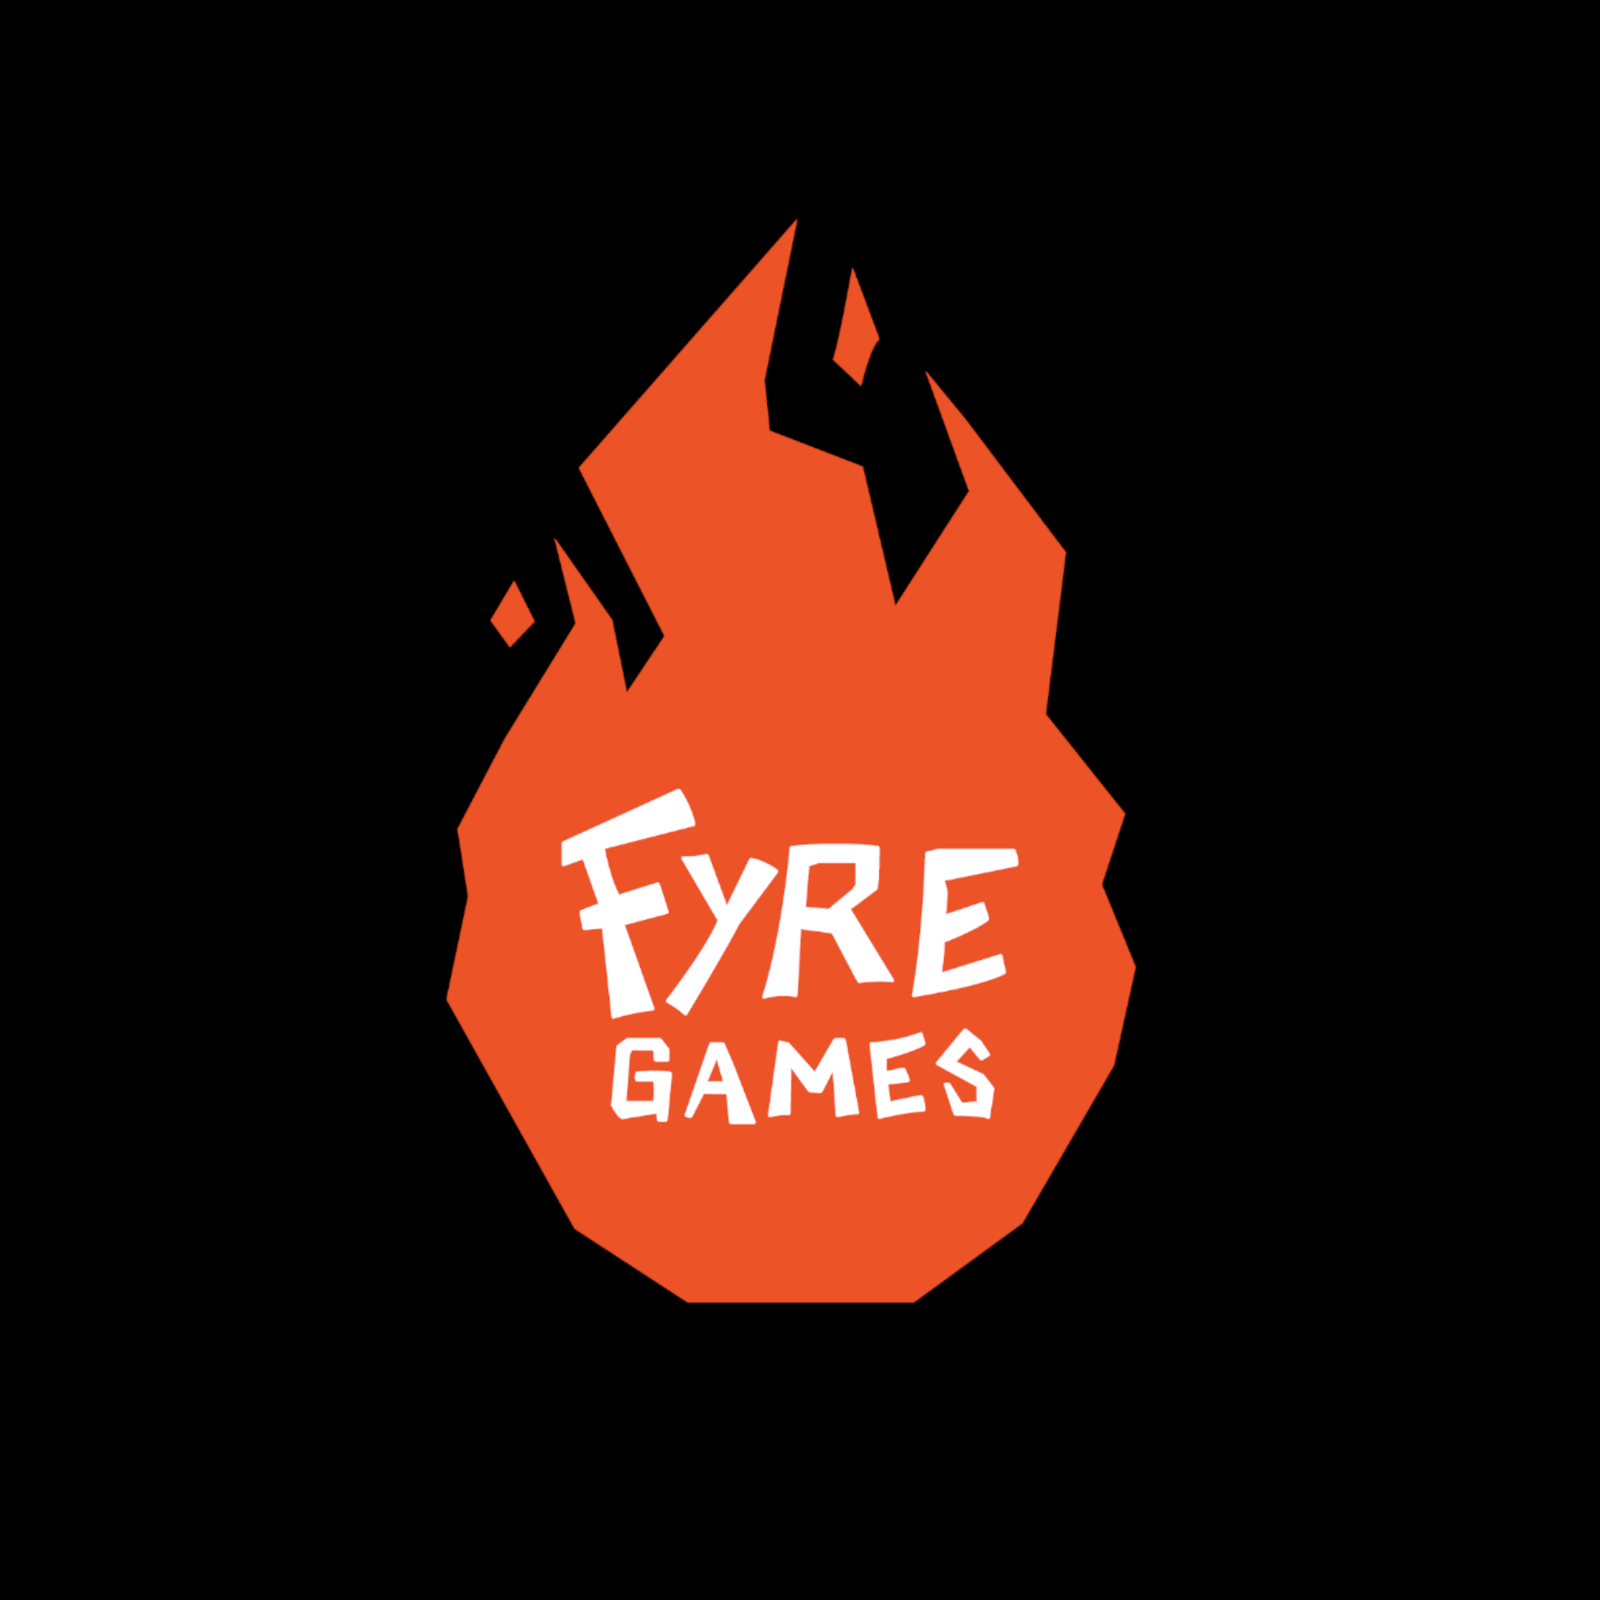 FYRE Games